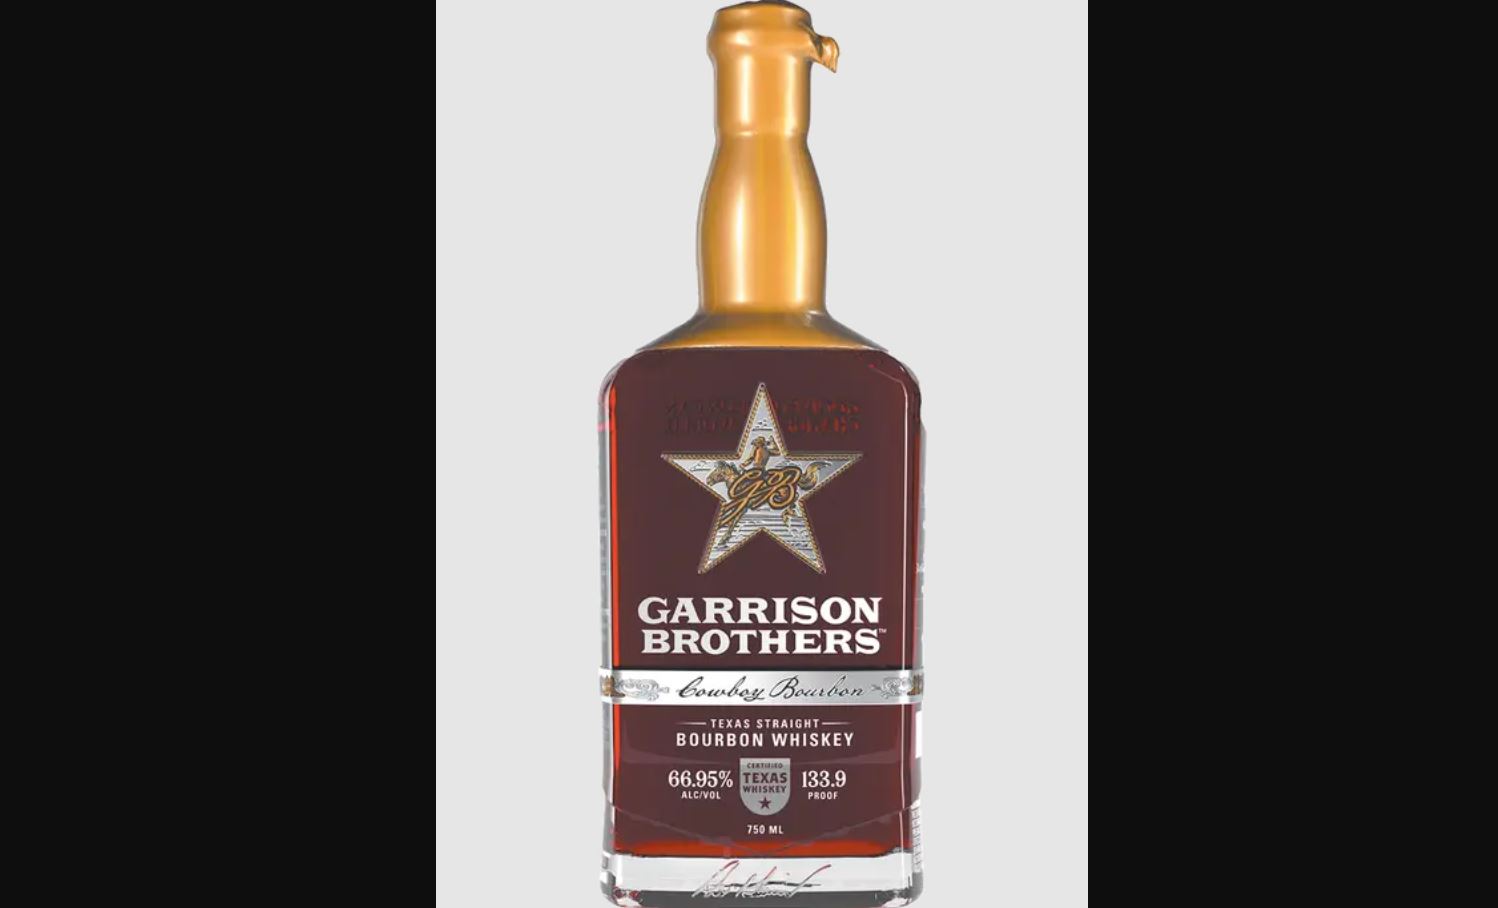 Garrison Brothers Cowboy Bourbon